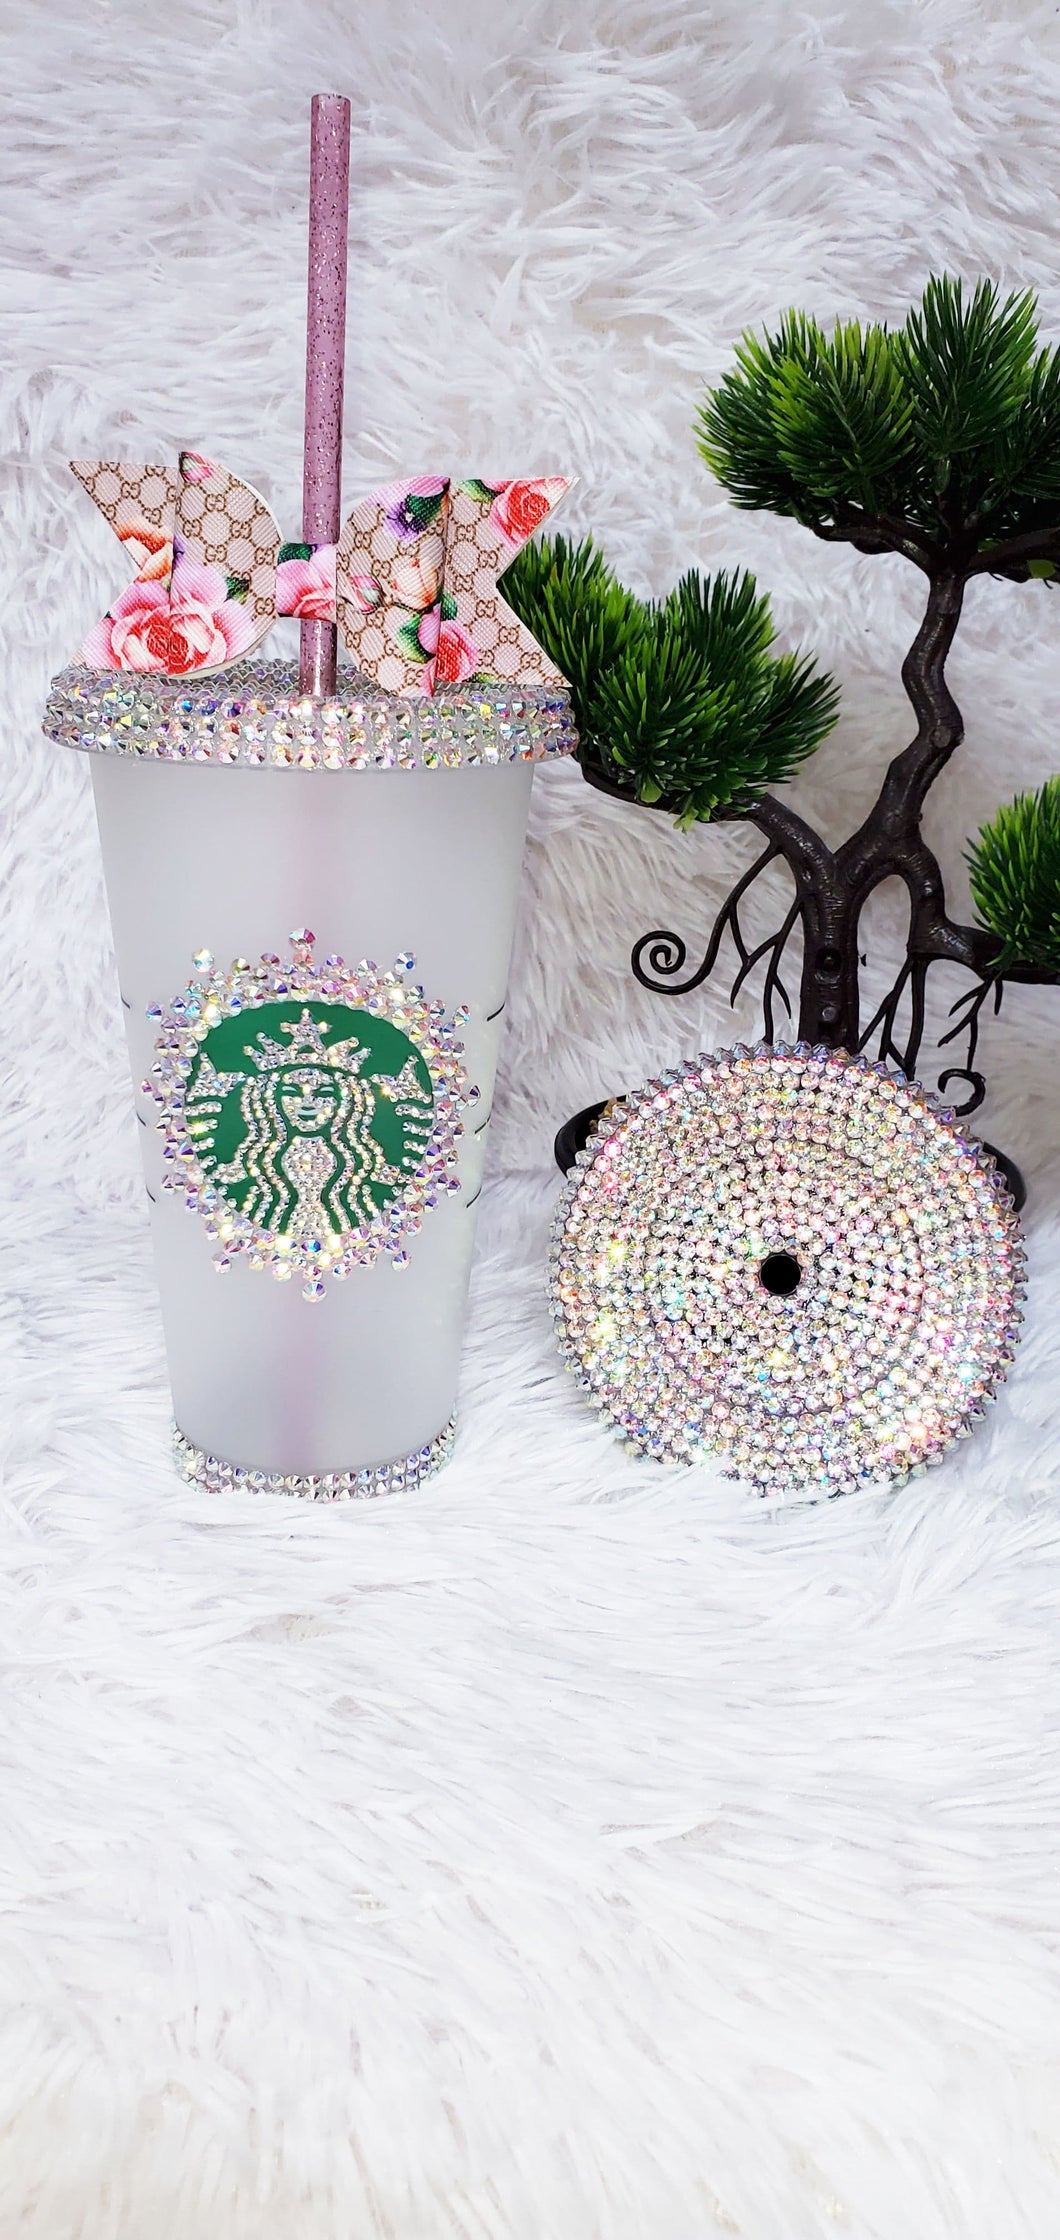 Starbucks Cup with rhinestones